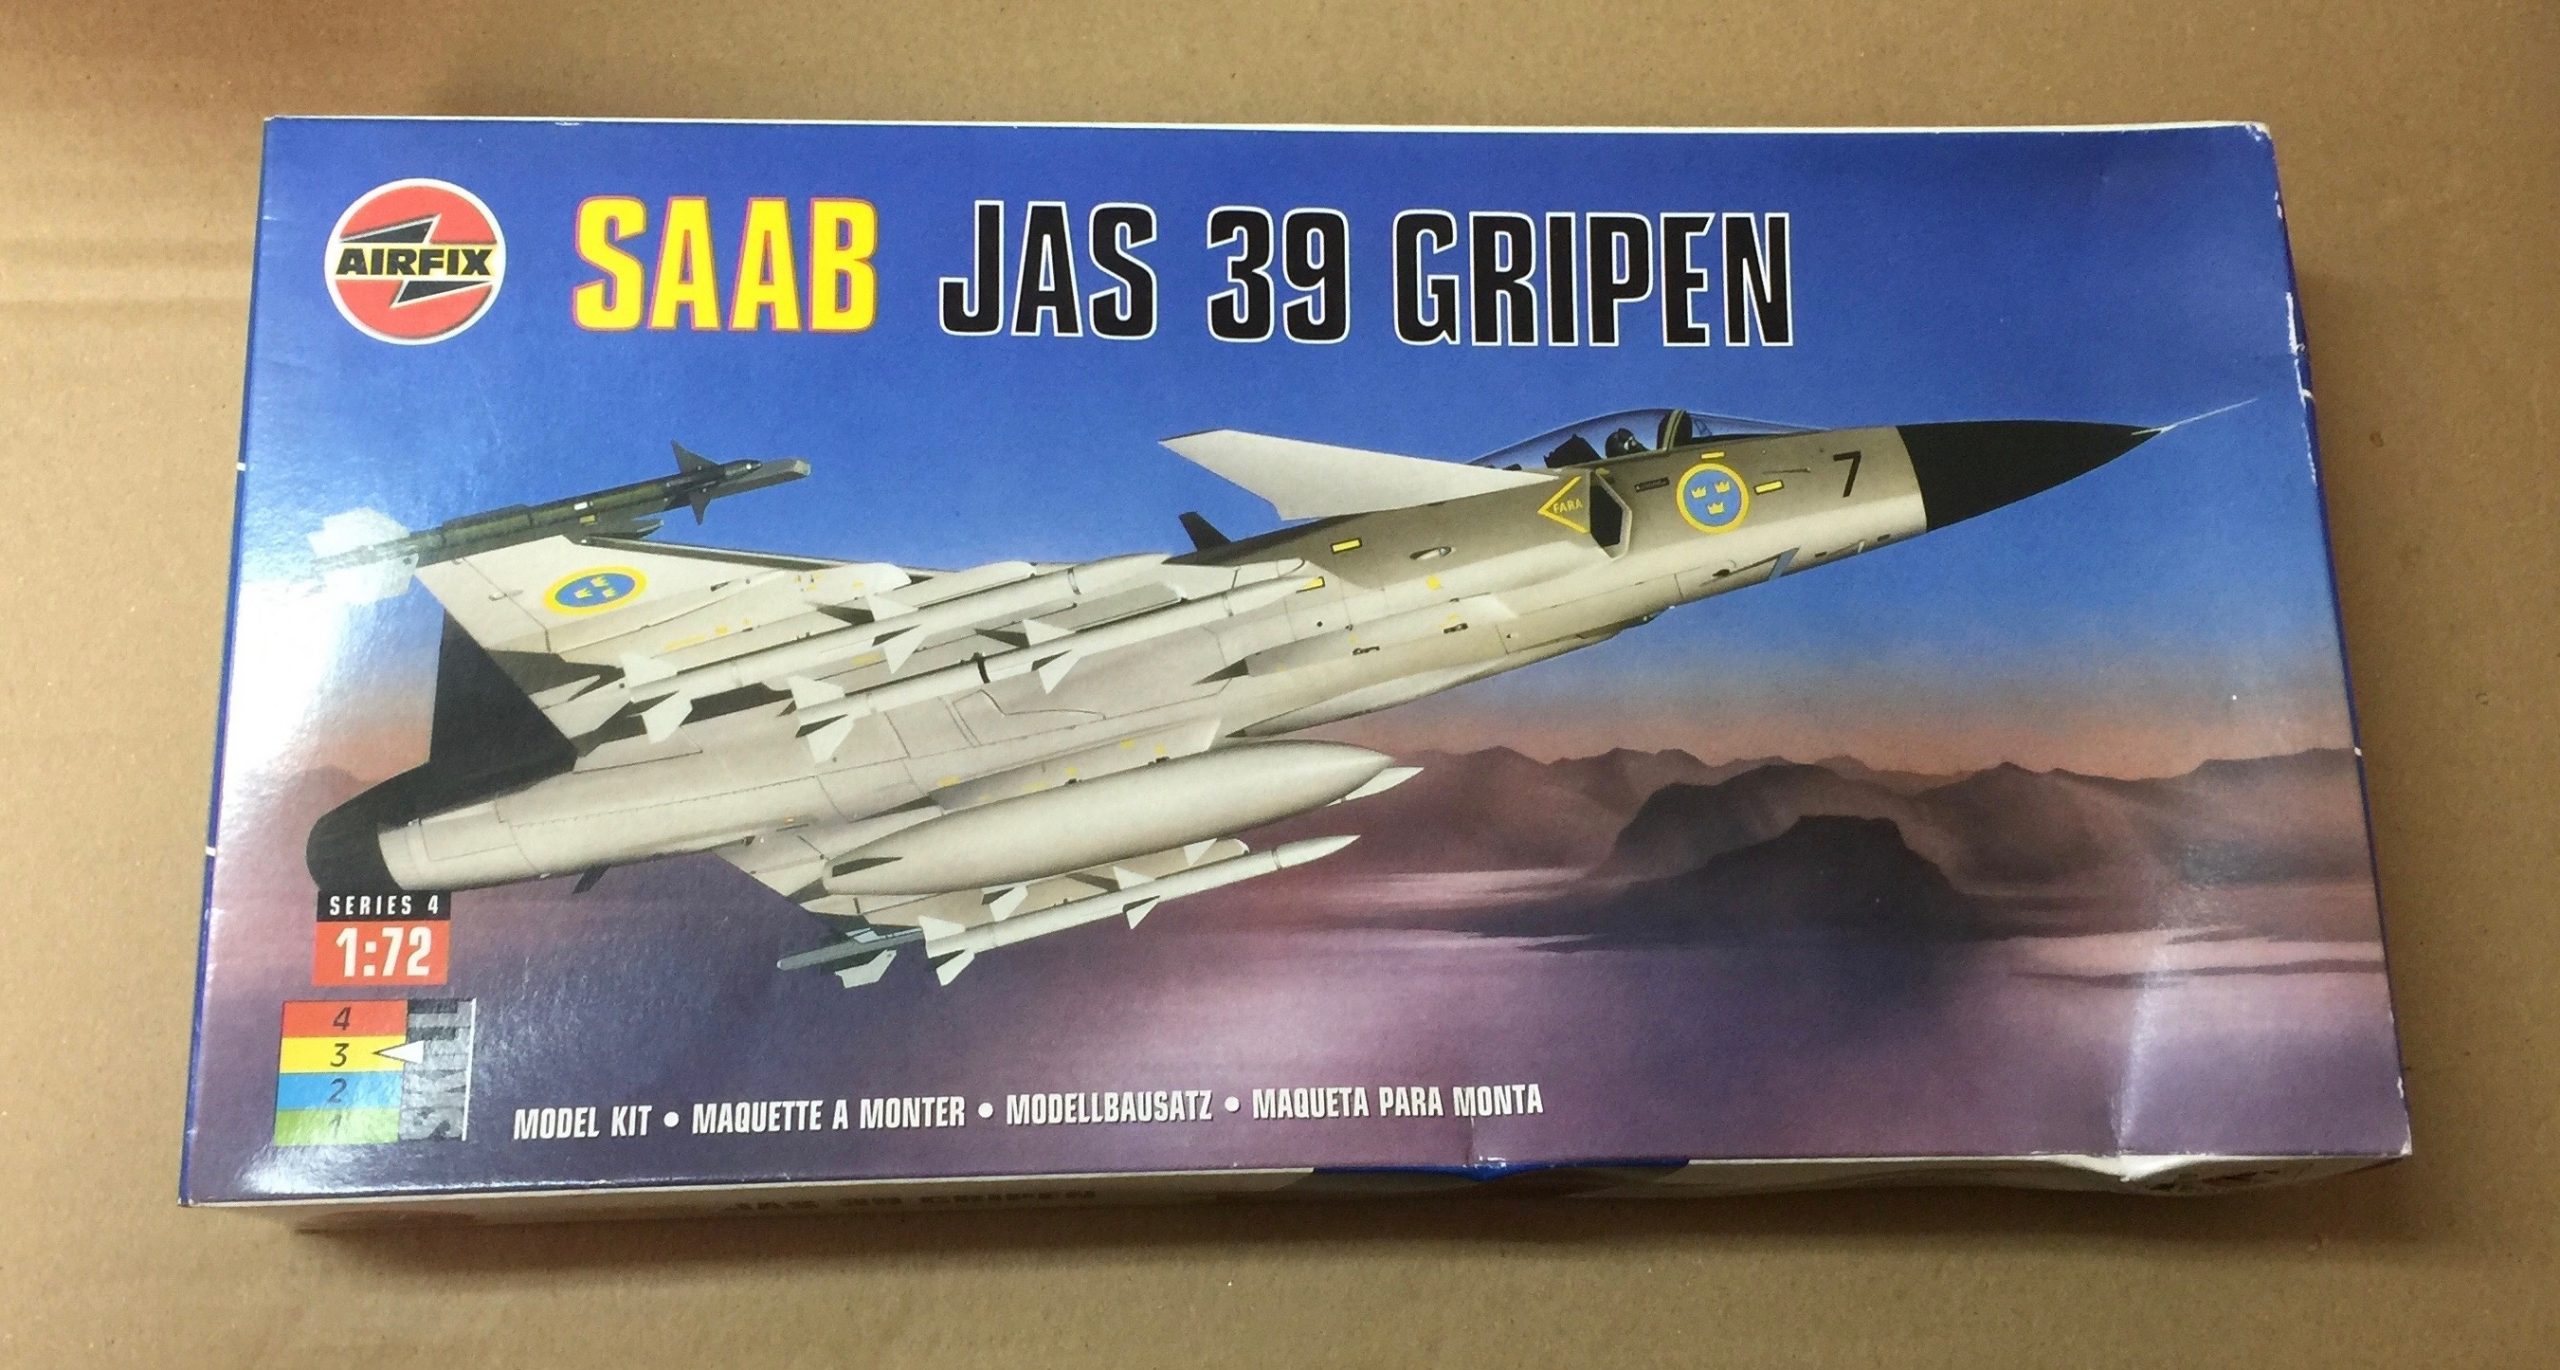 Airfix Saab Jas 39 Gripen Ref 04043 Escala 1/72